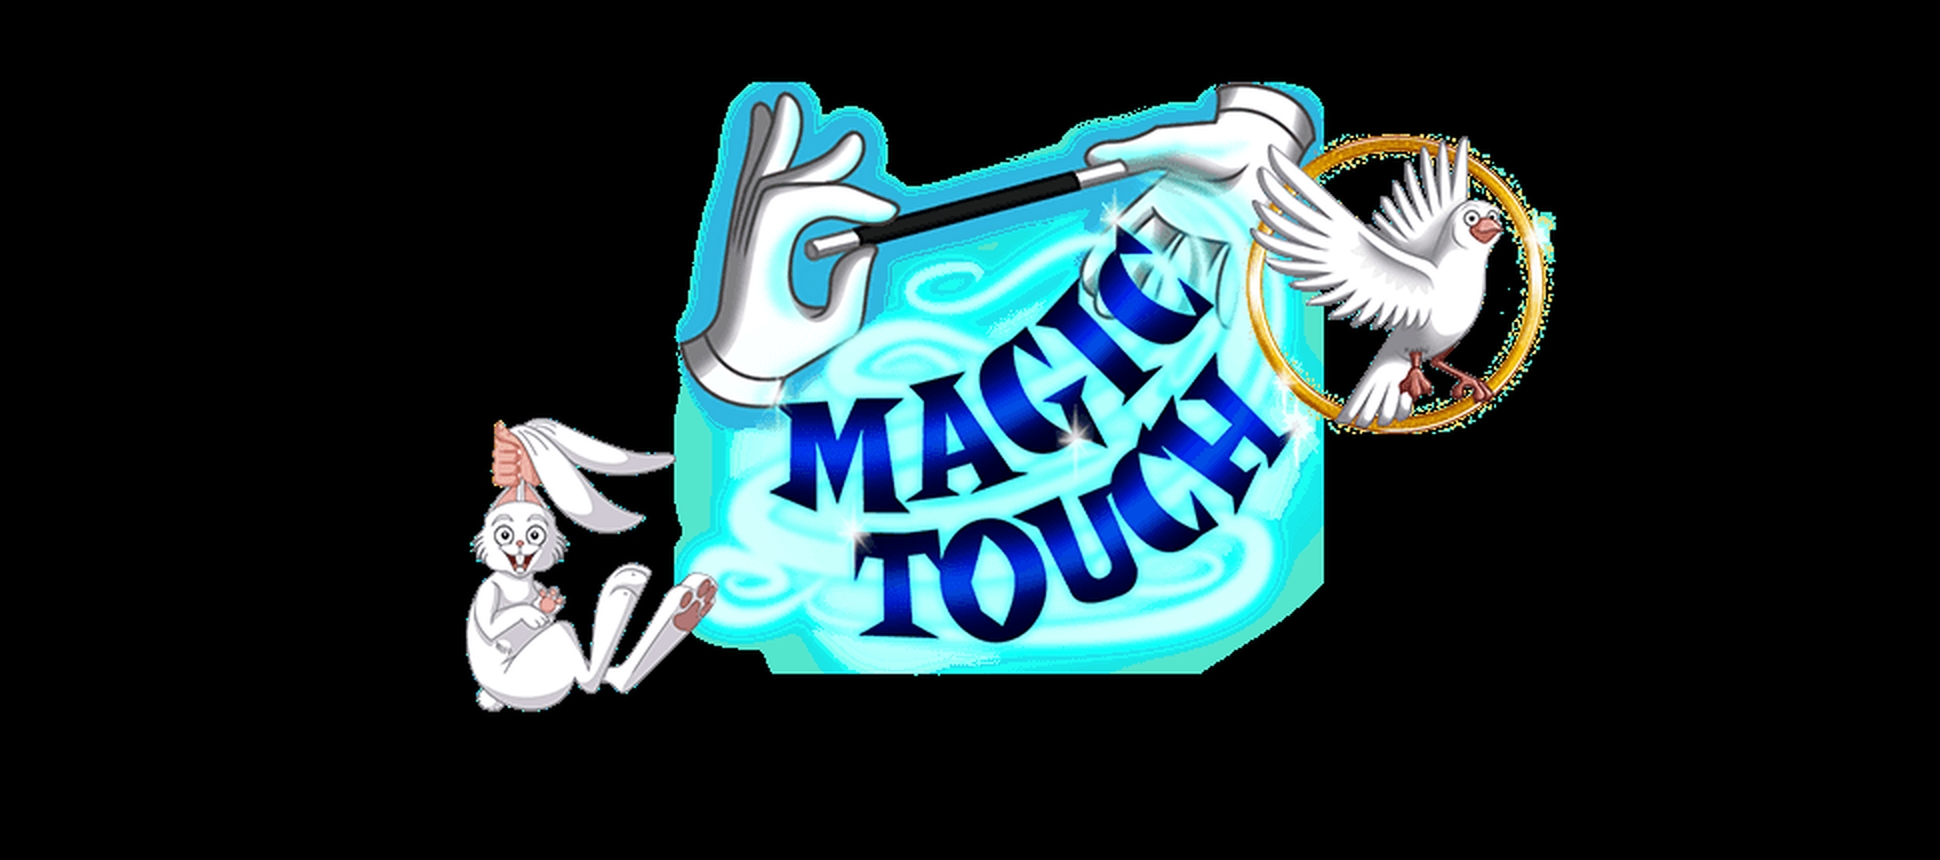 Magic Touch demo